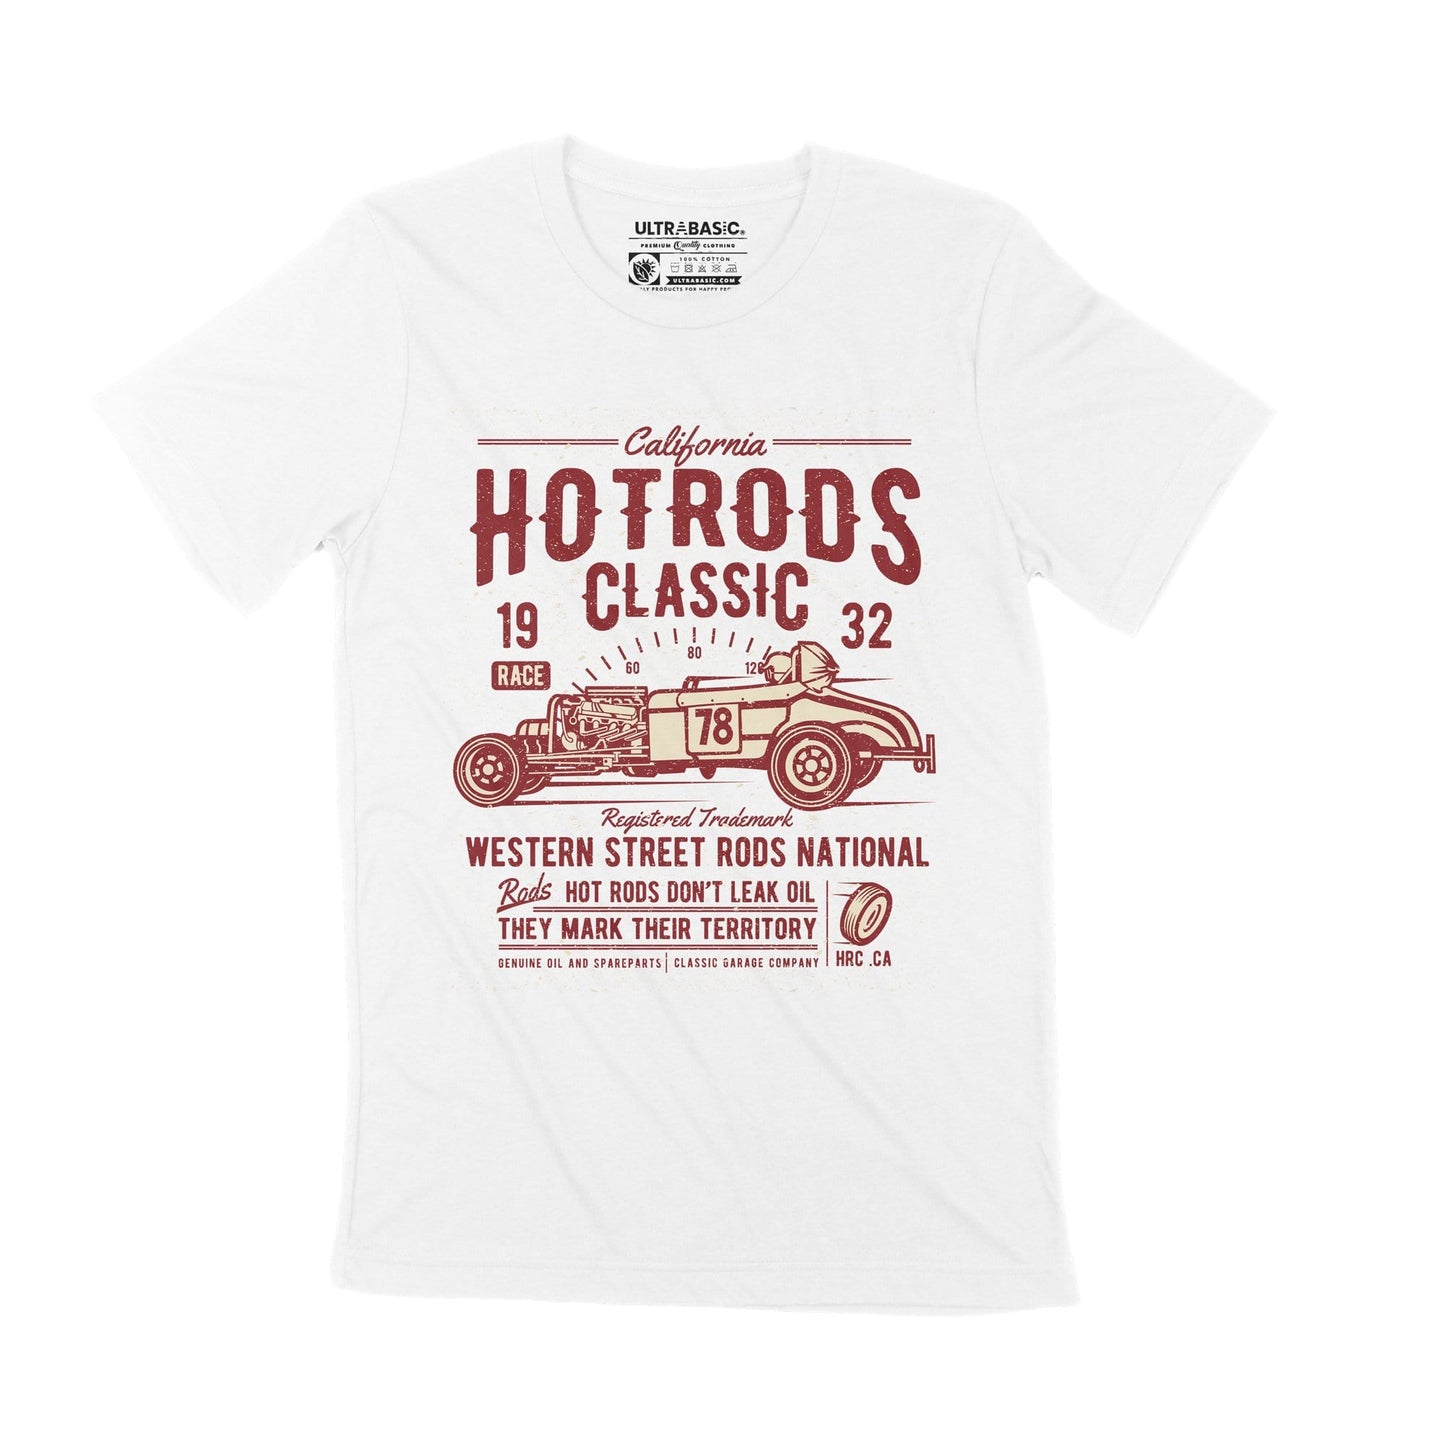 ULTRABASIC Men's T-Shirt California Hotrods Classic 1932 - Rods Race Tee Shirt